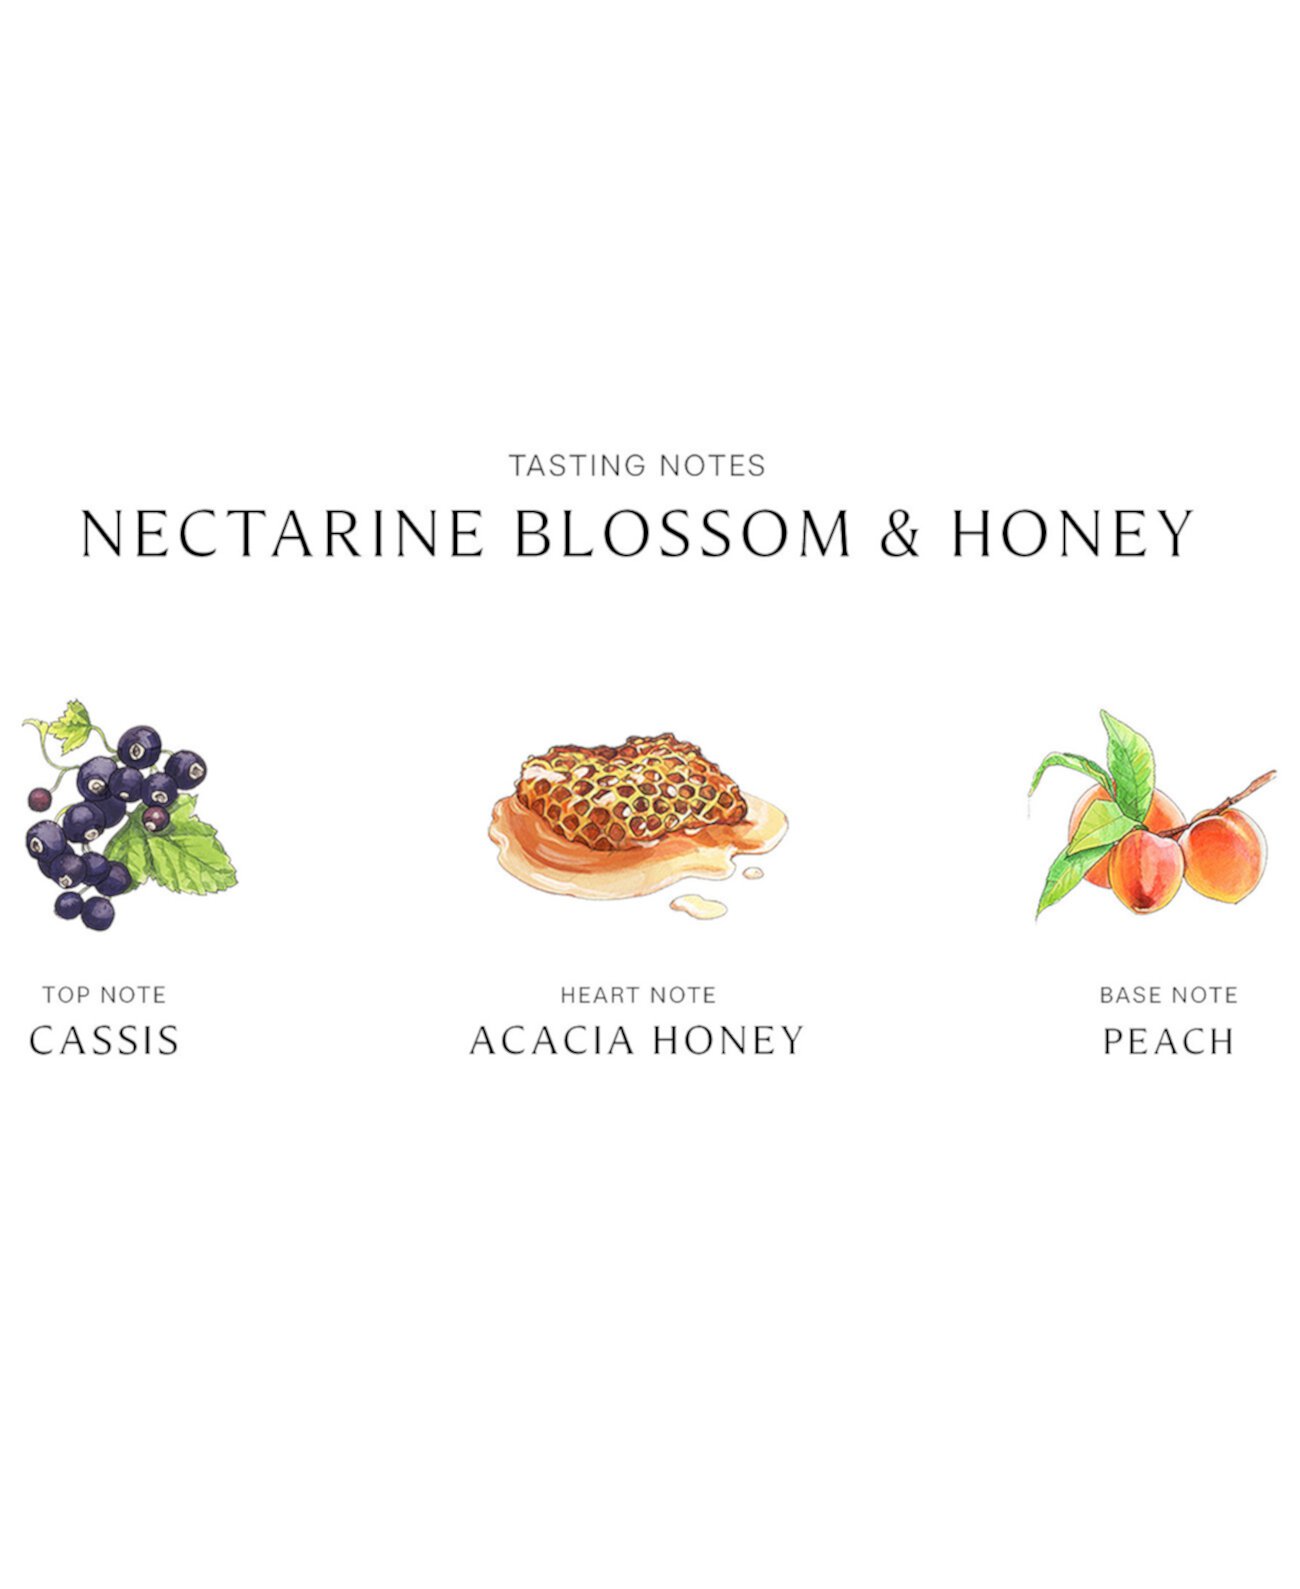 Nectarine blossom honey